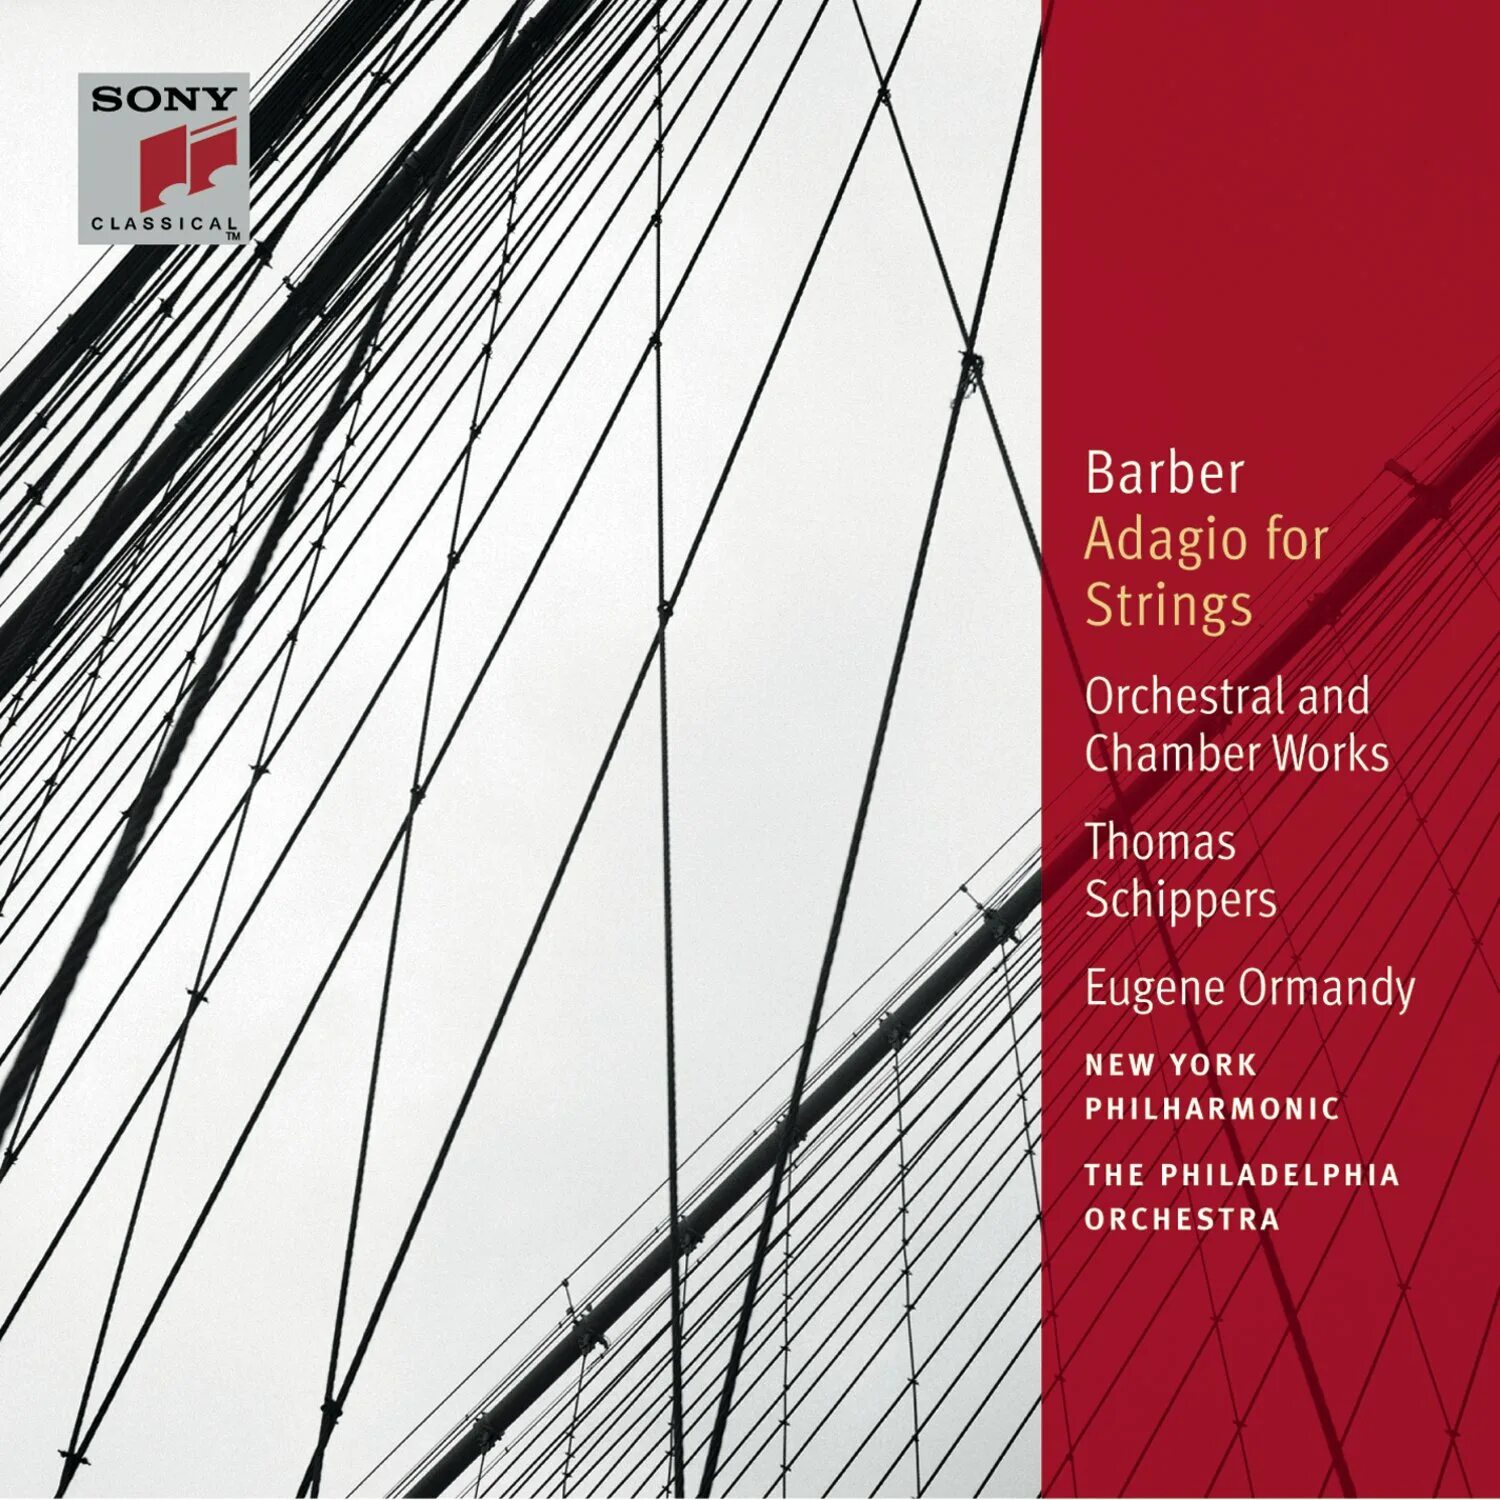 Барбер Адажио. Адажио стрингс. Adagio for Strings, op. 11 Samuel Barber. Samuel Barber. Barber adagio